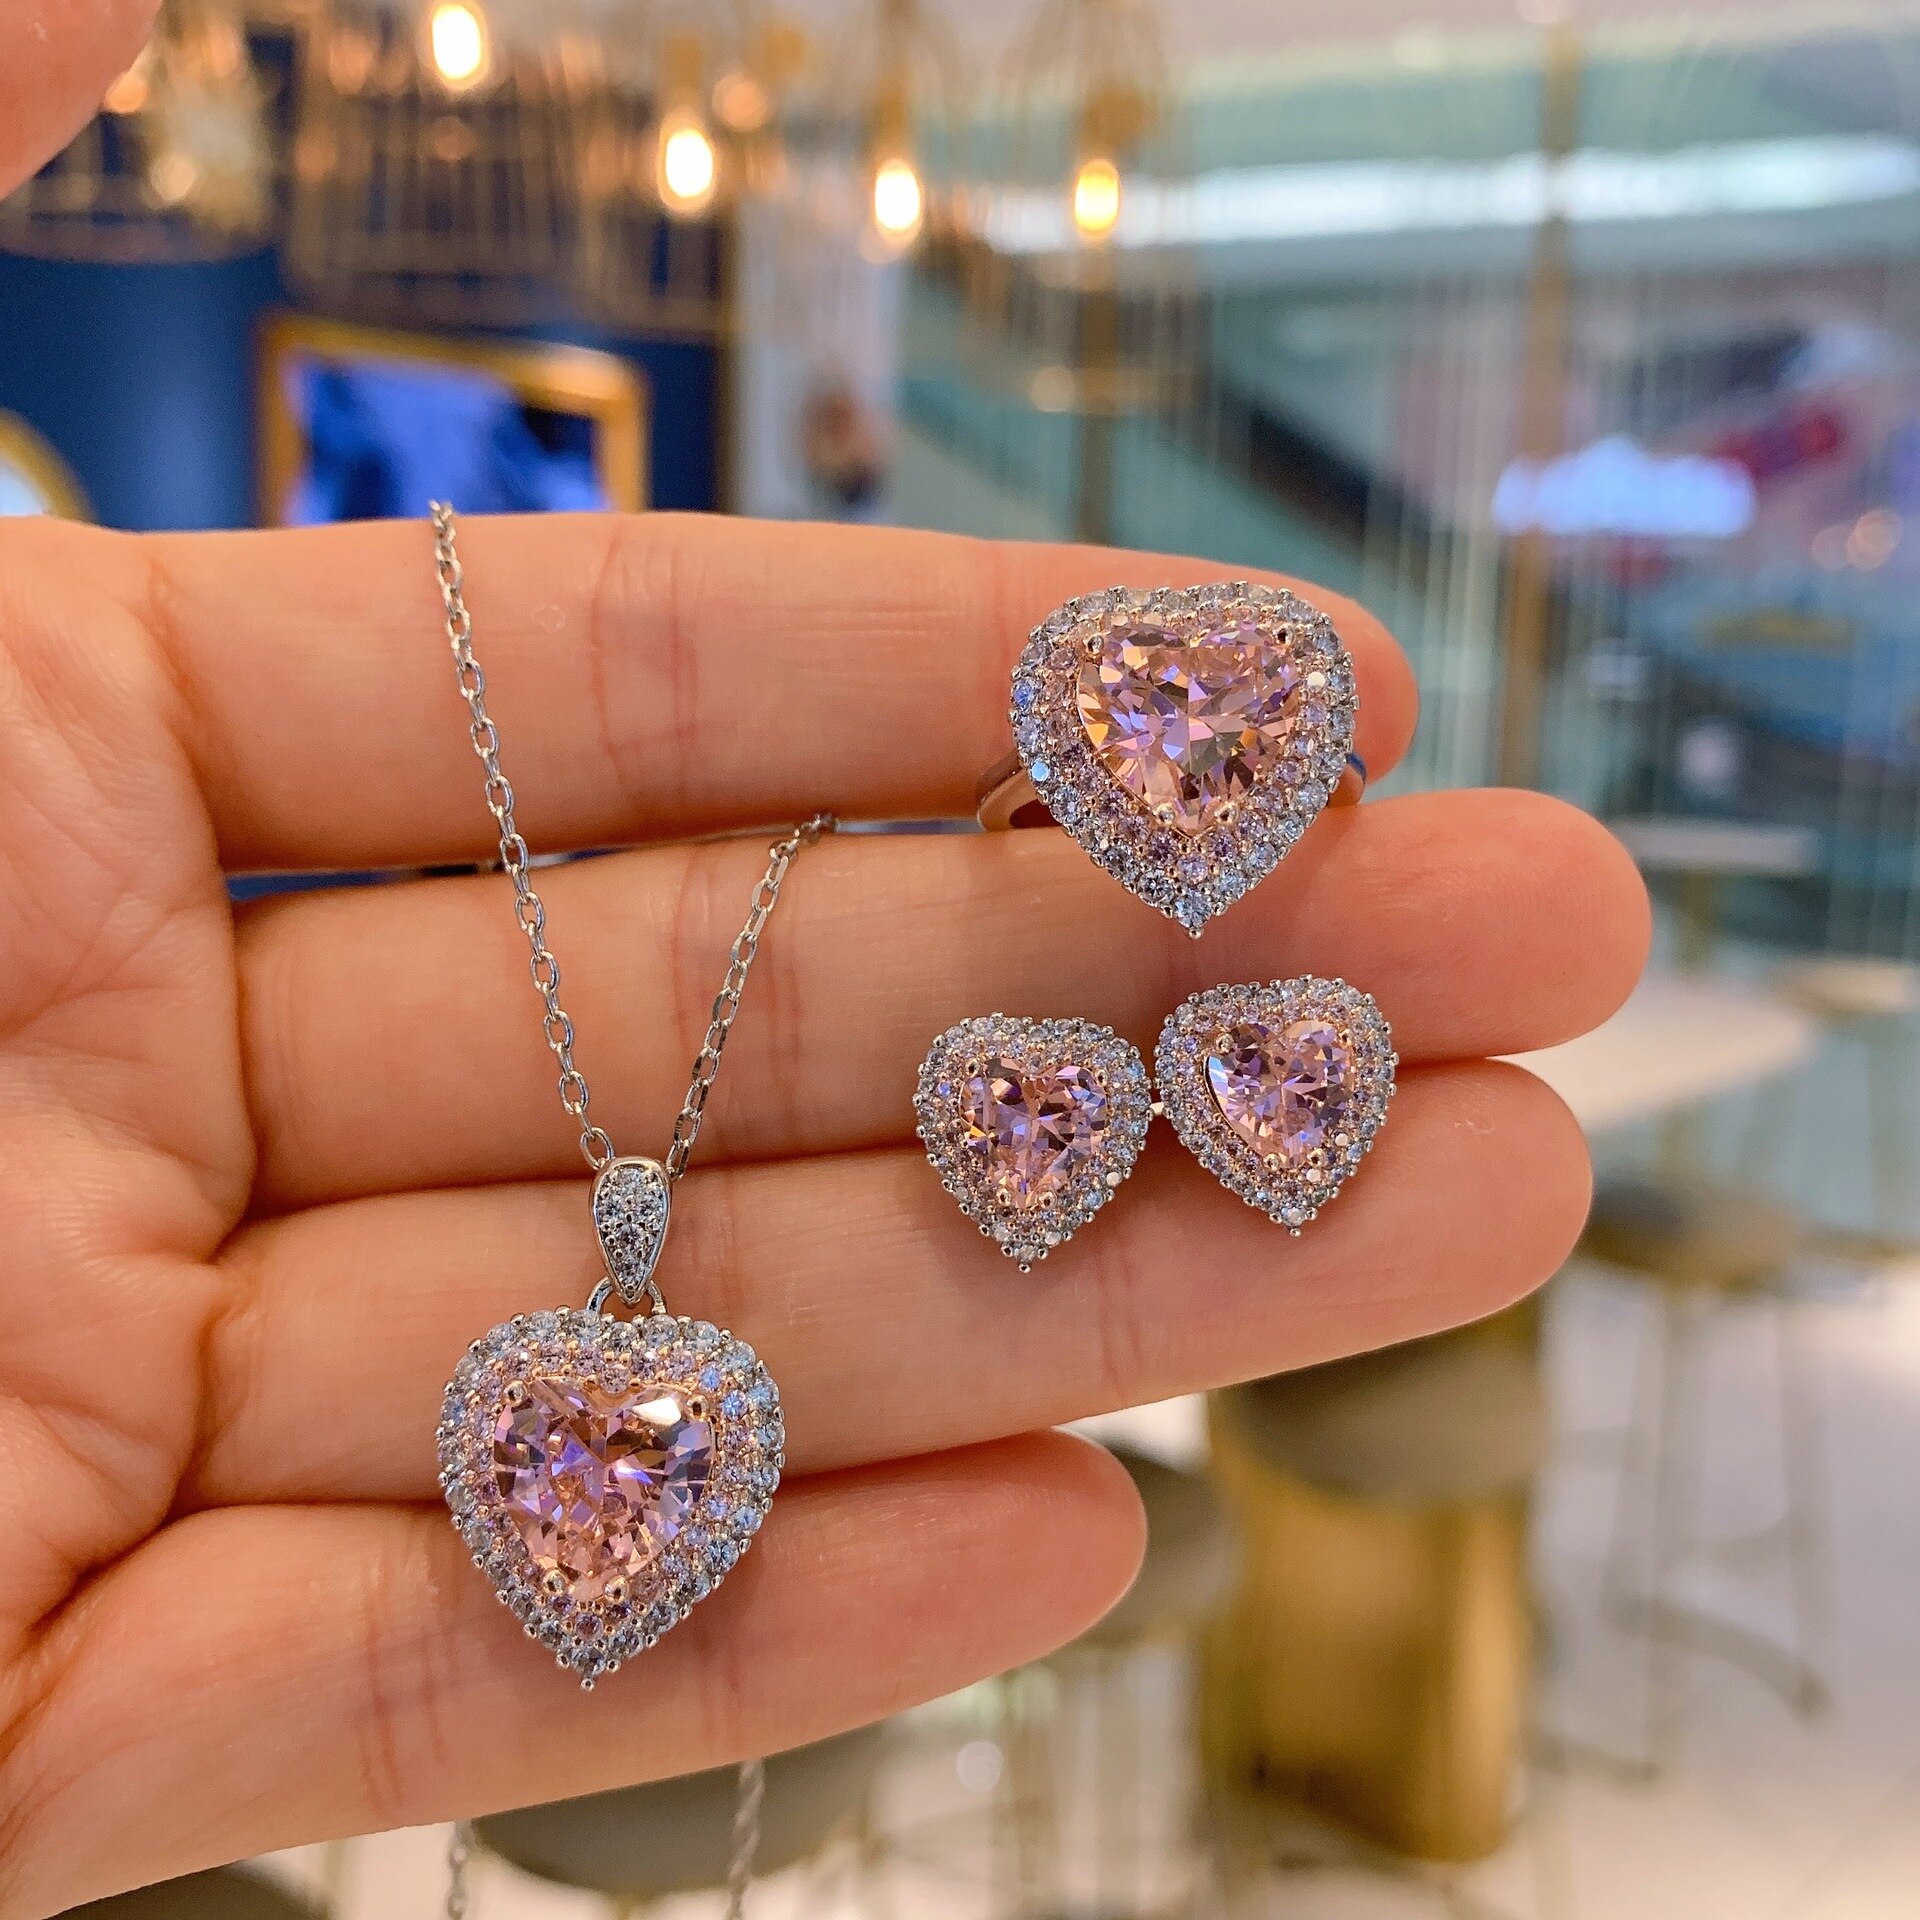 Romantic-Heart-Shaped-Love-Pink-Quartz-Cubic-Zircon-Pendant-Necklace-Earrings-Adjustable-Ring-Wedding-Jewelry-Gift.jpg